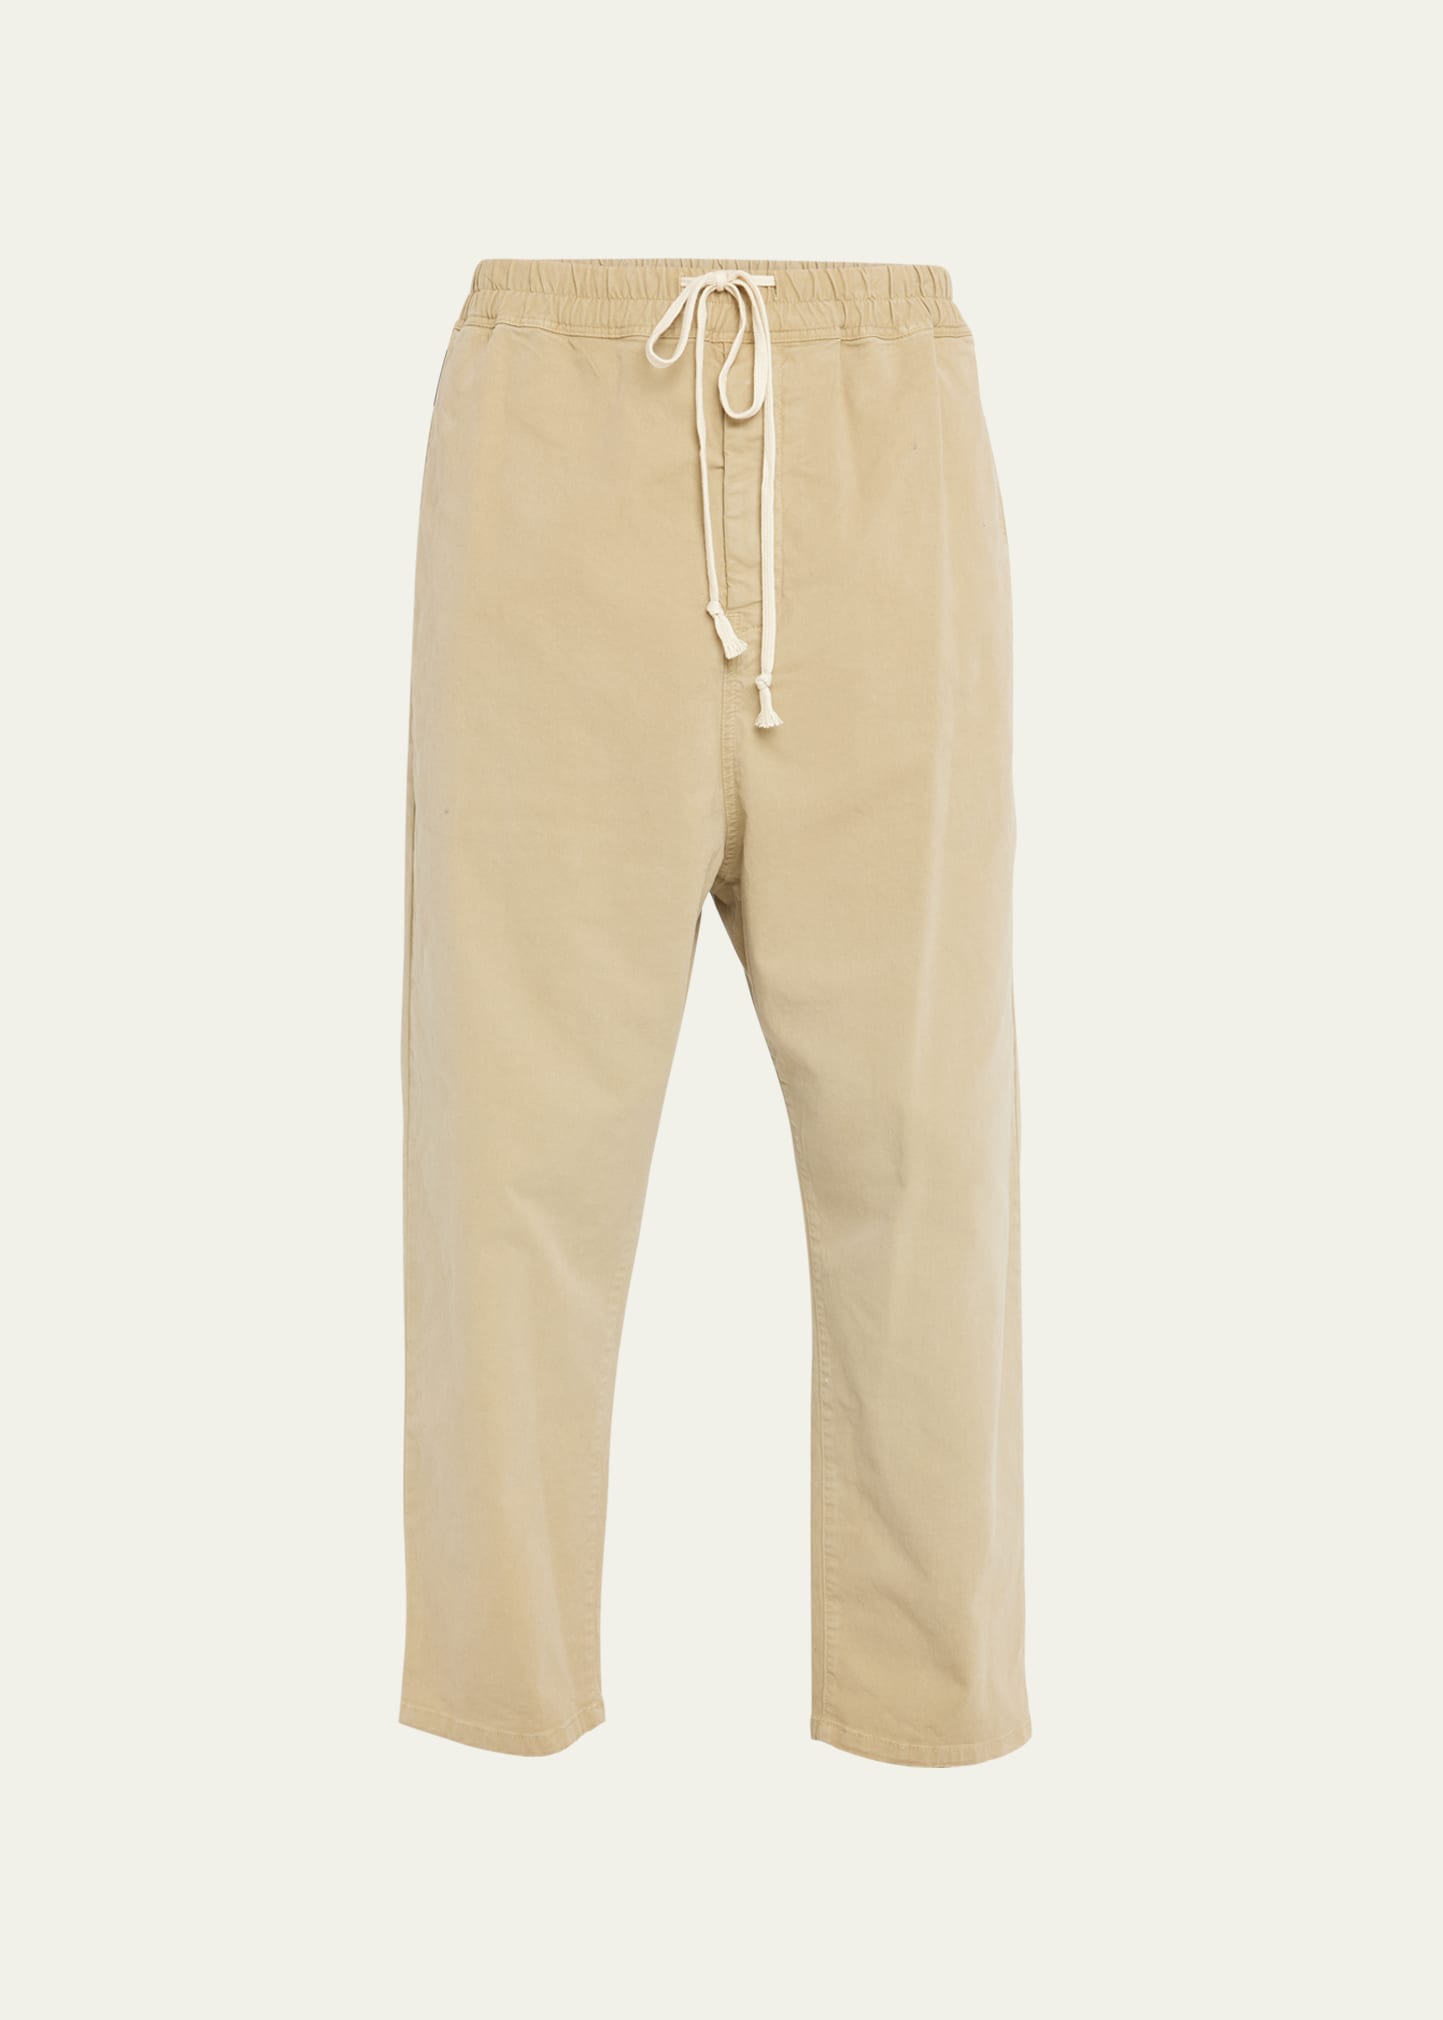 Nili Lotan Men's Drop-crotch Drawstring Pants In Military Khaki